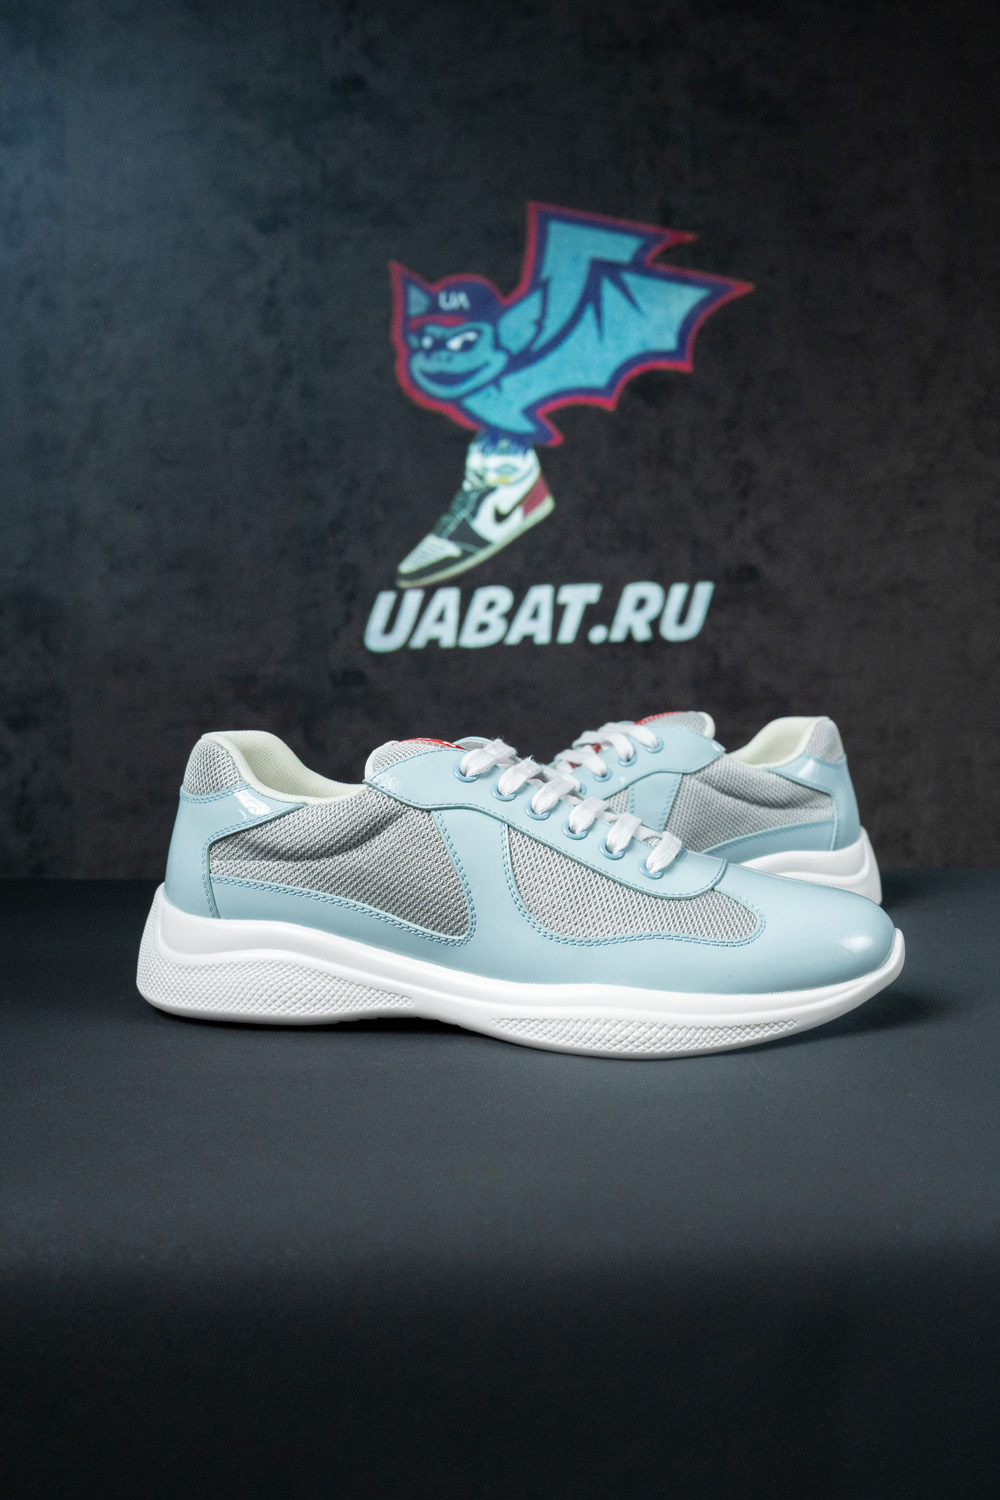 Prada America's Cup sneakers "Blue Silver"